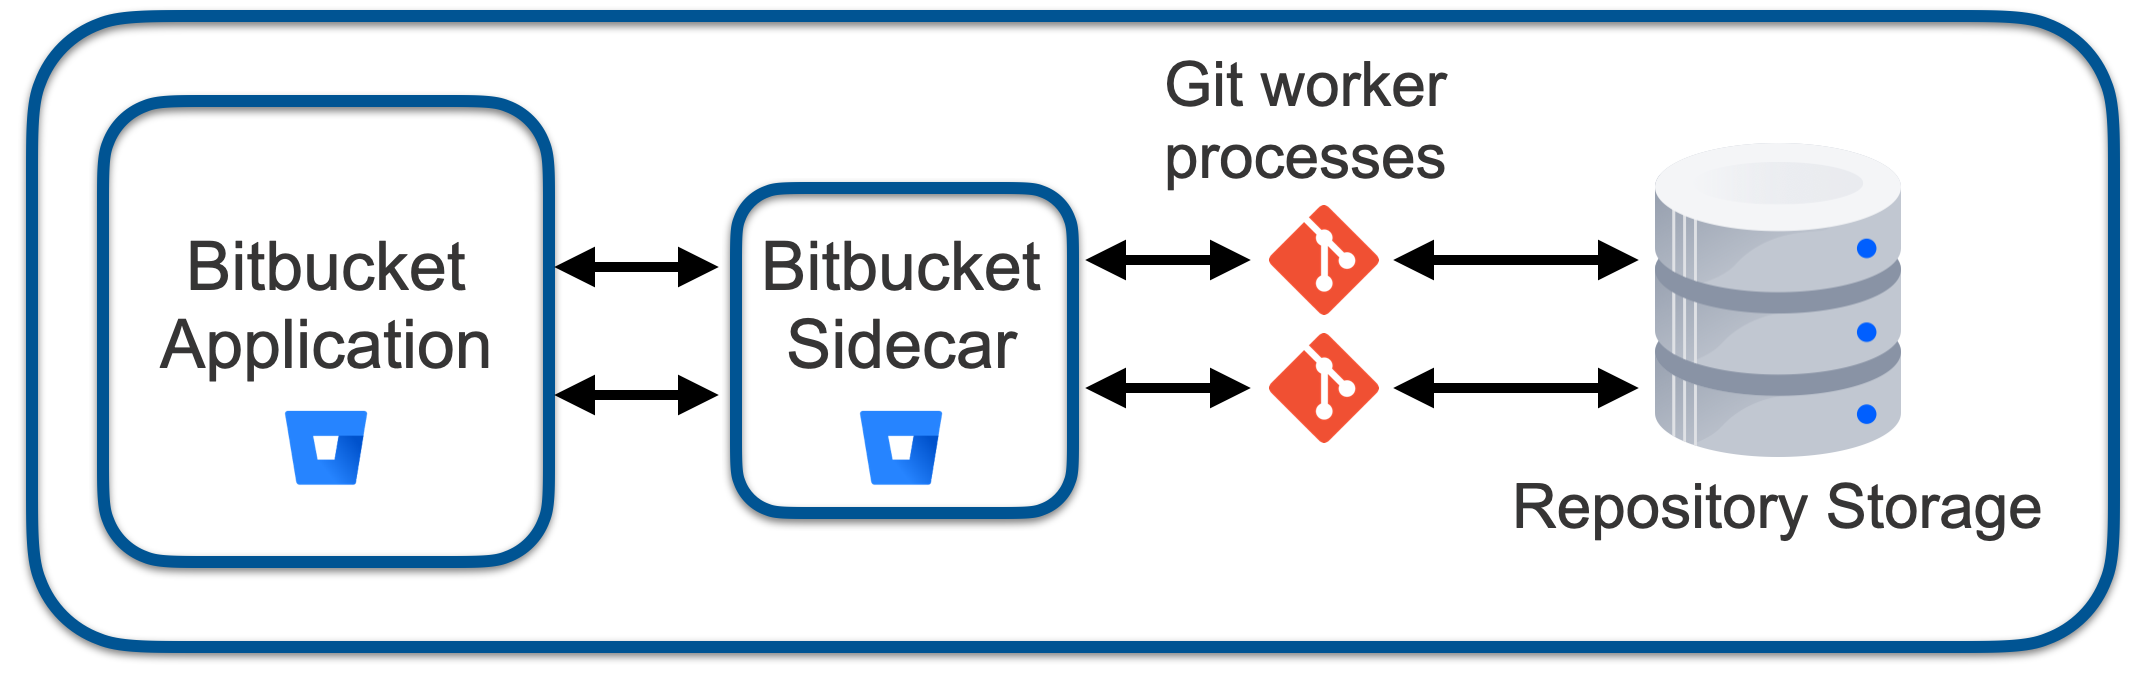 Bitbucket with sidecar process